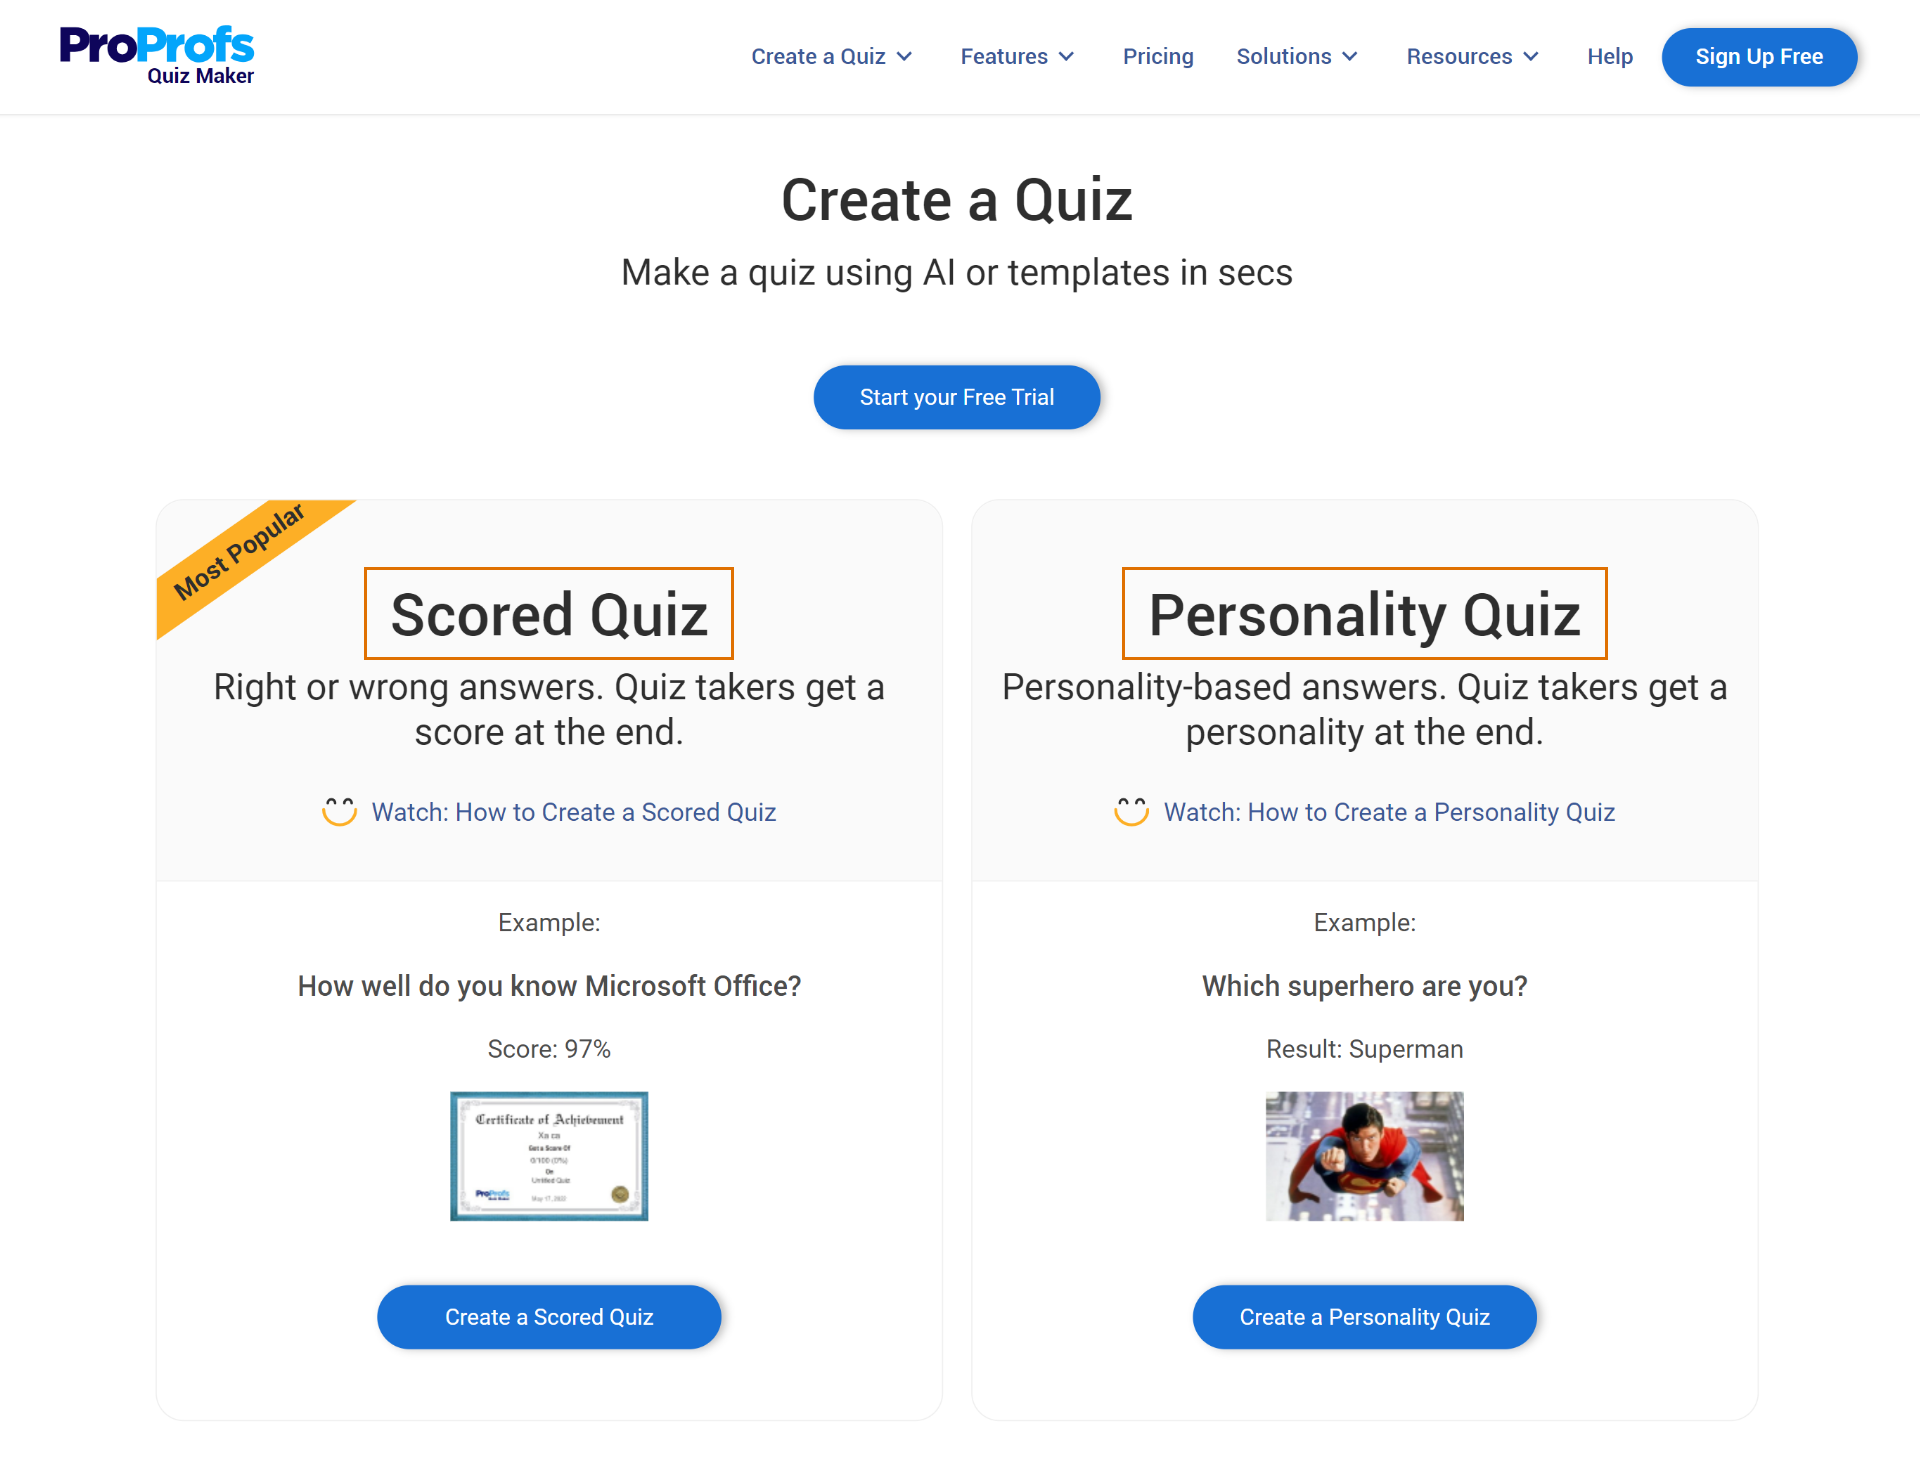 Choose a Quiz Type